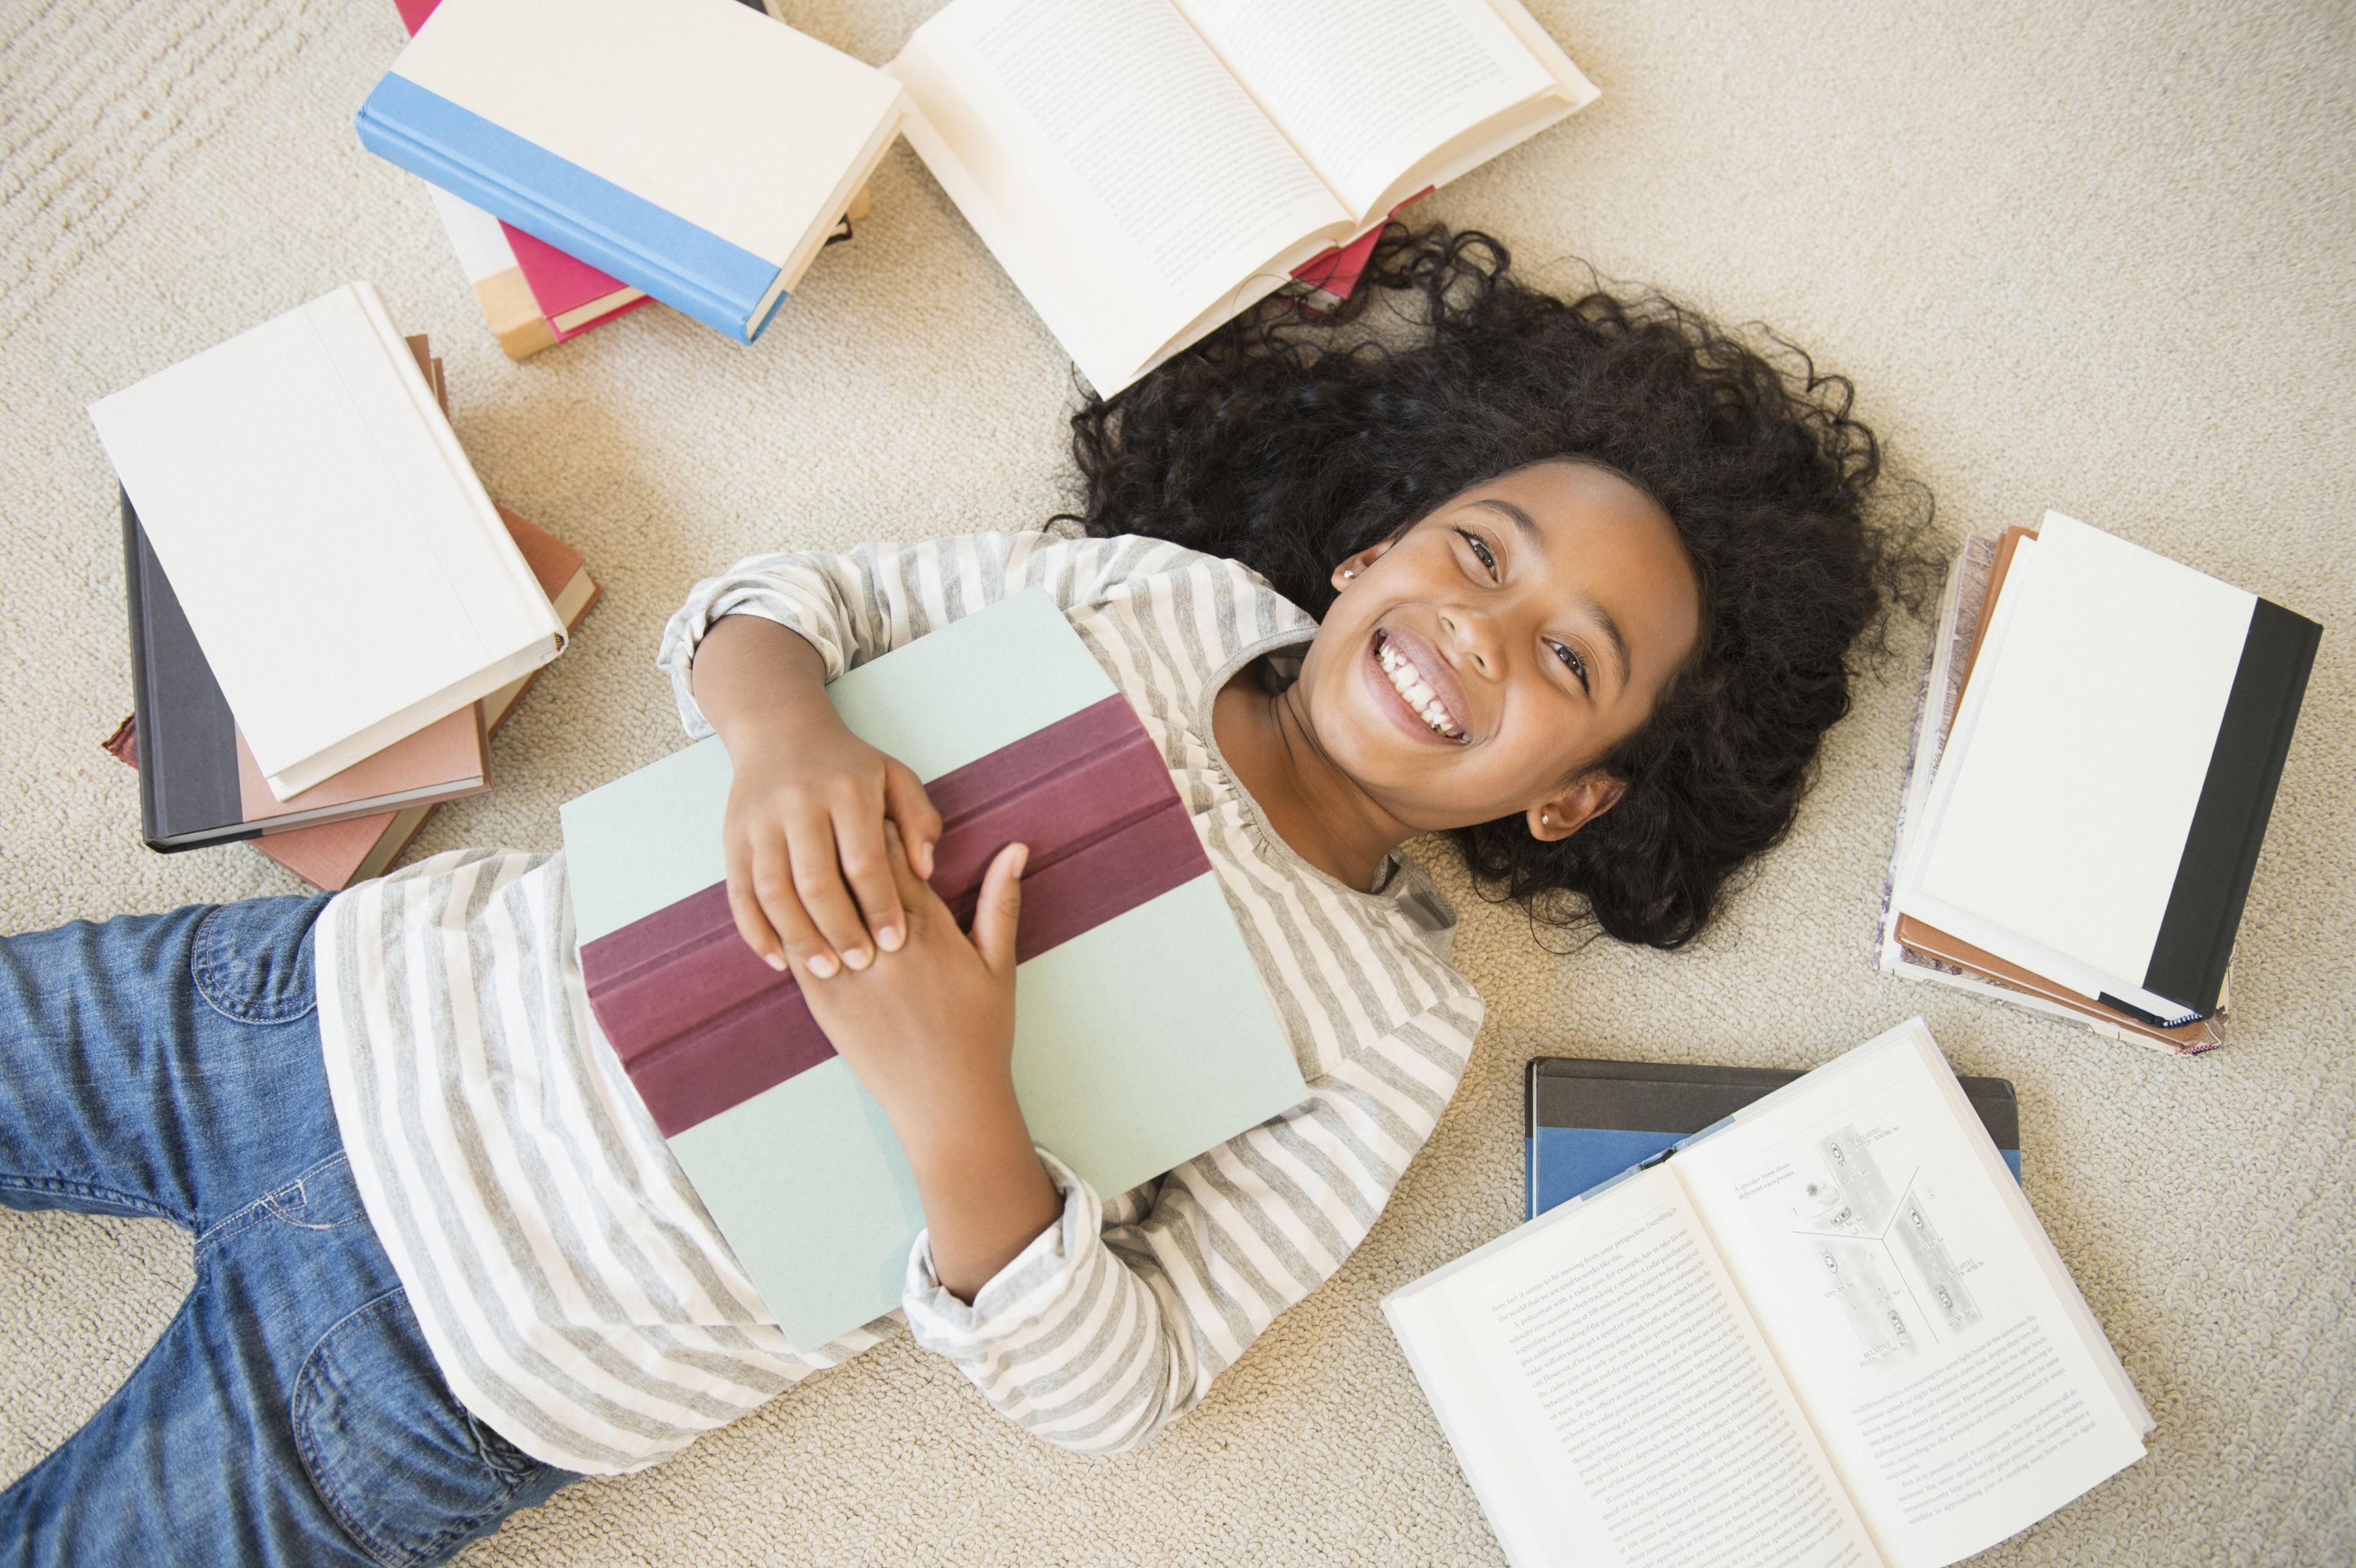 Get Free Kids Stuff with Summer Reading Rewards